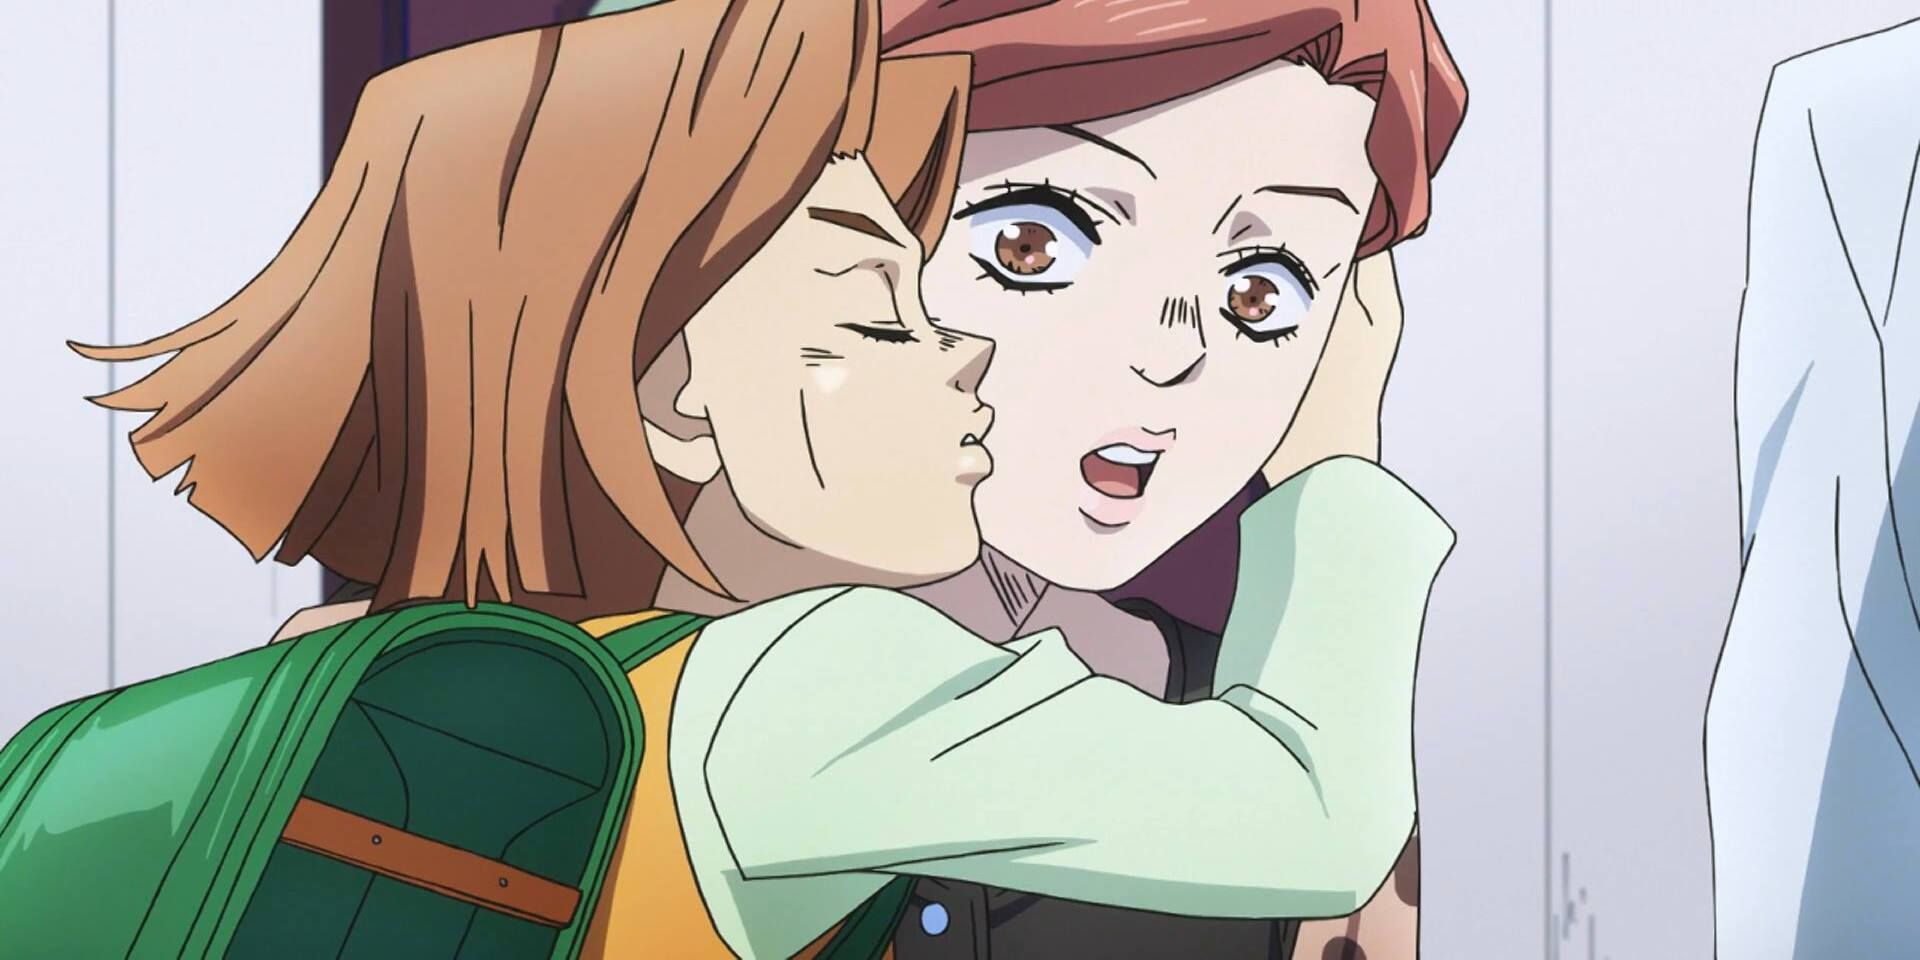 Hayato gives his mom a kiss on the cheek - JoJo's Bizarre Adventure: Diamond is Unbreakable